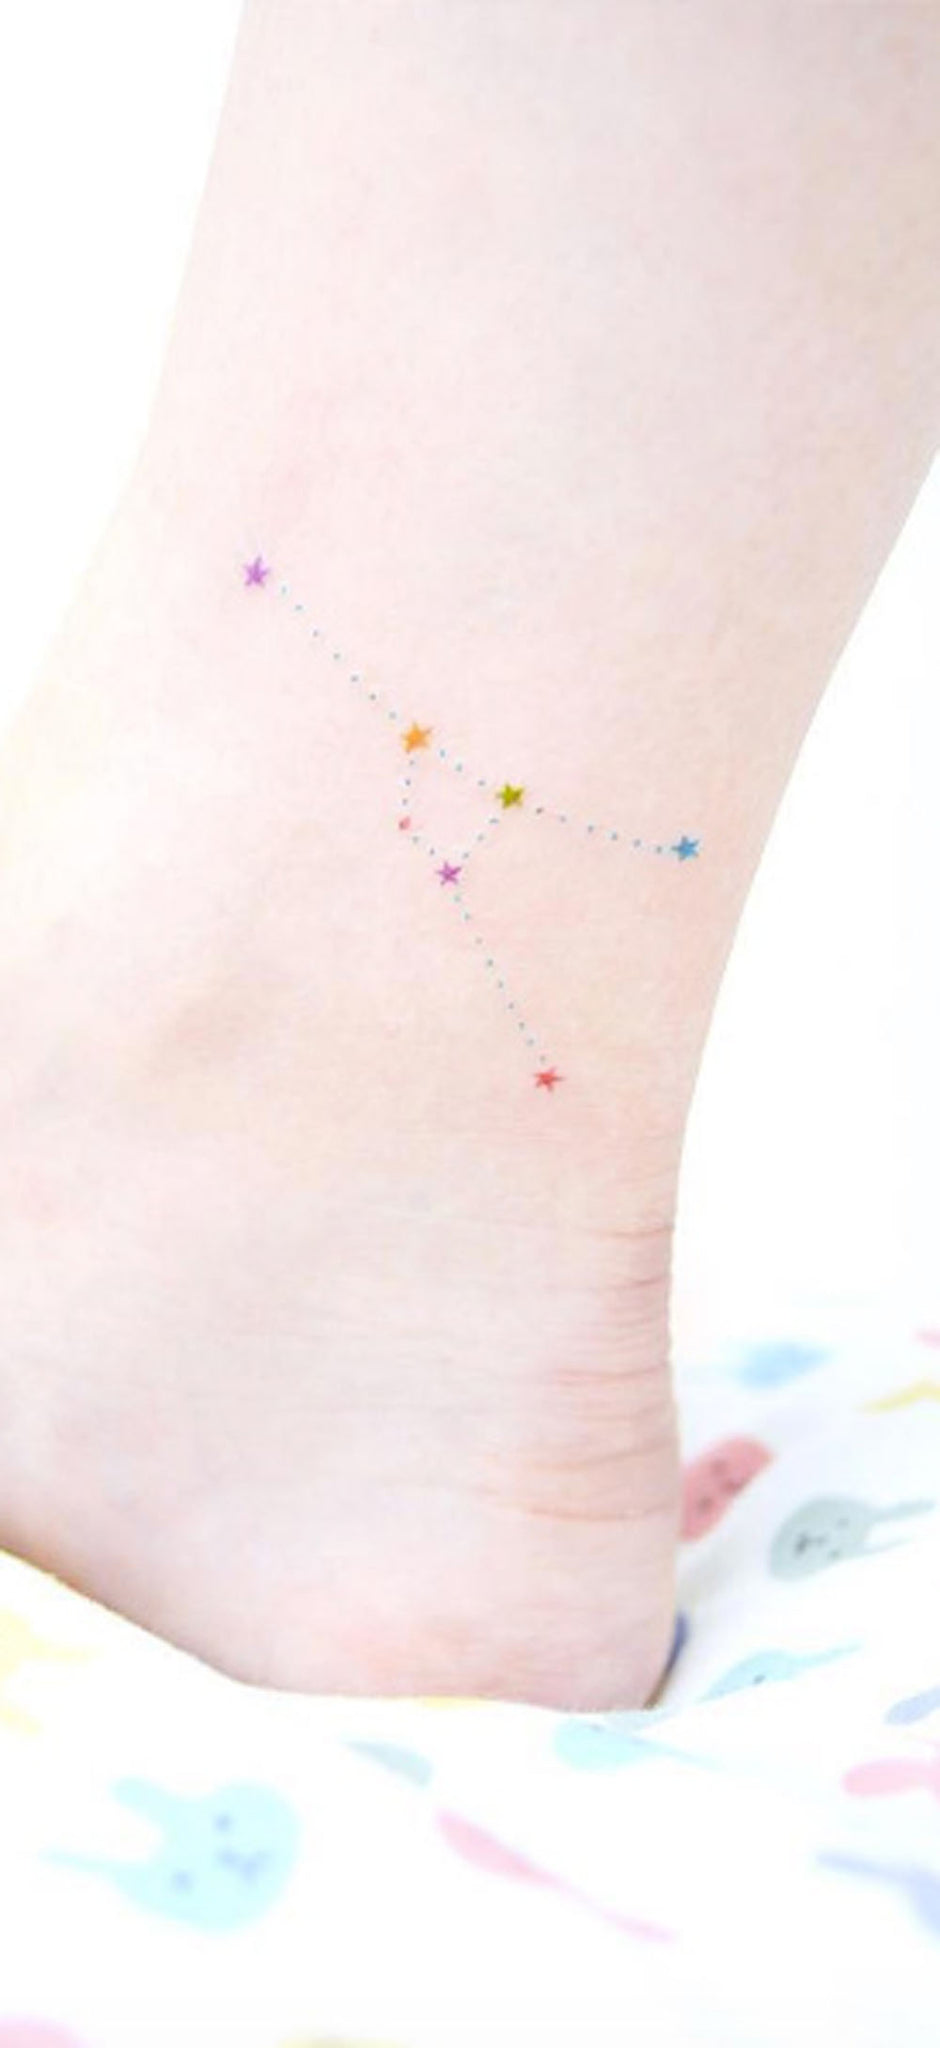 Unique Watercolor Constellation Ankle Foot Leg Tattoo Ideas for Women -  Única constelación de acuarela tobillo Tattoo Ideas para mujeres - www.MyBodiArt.com